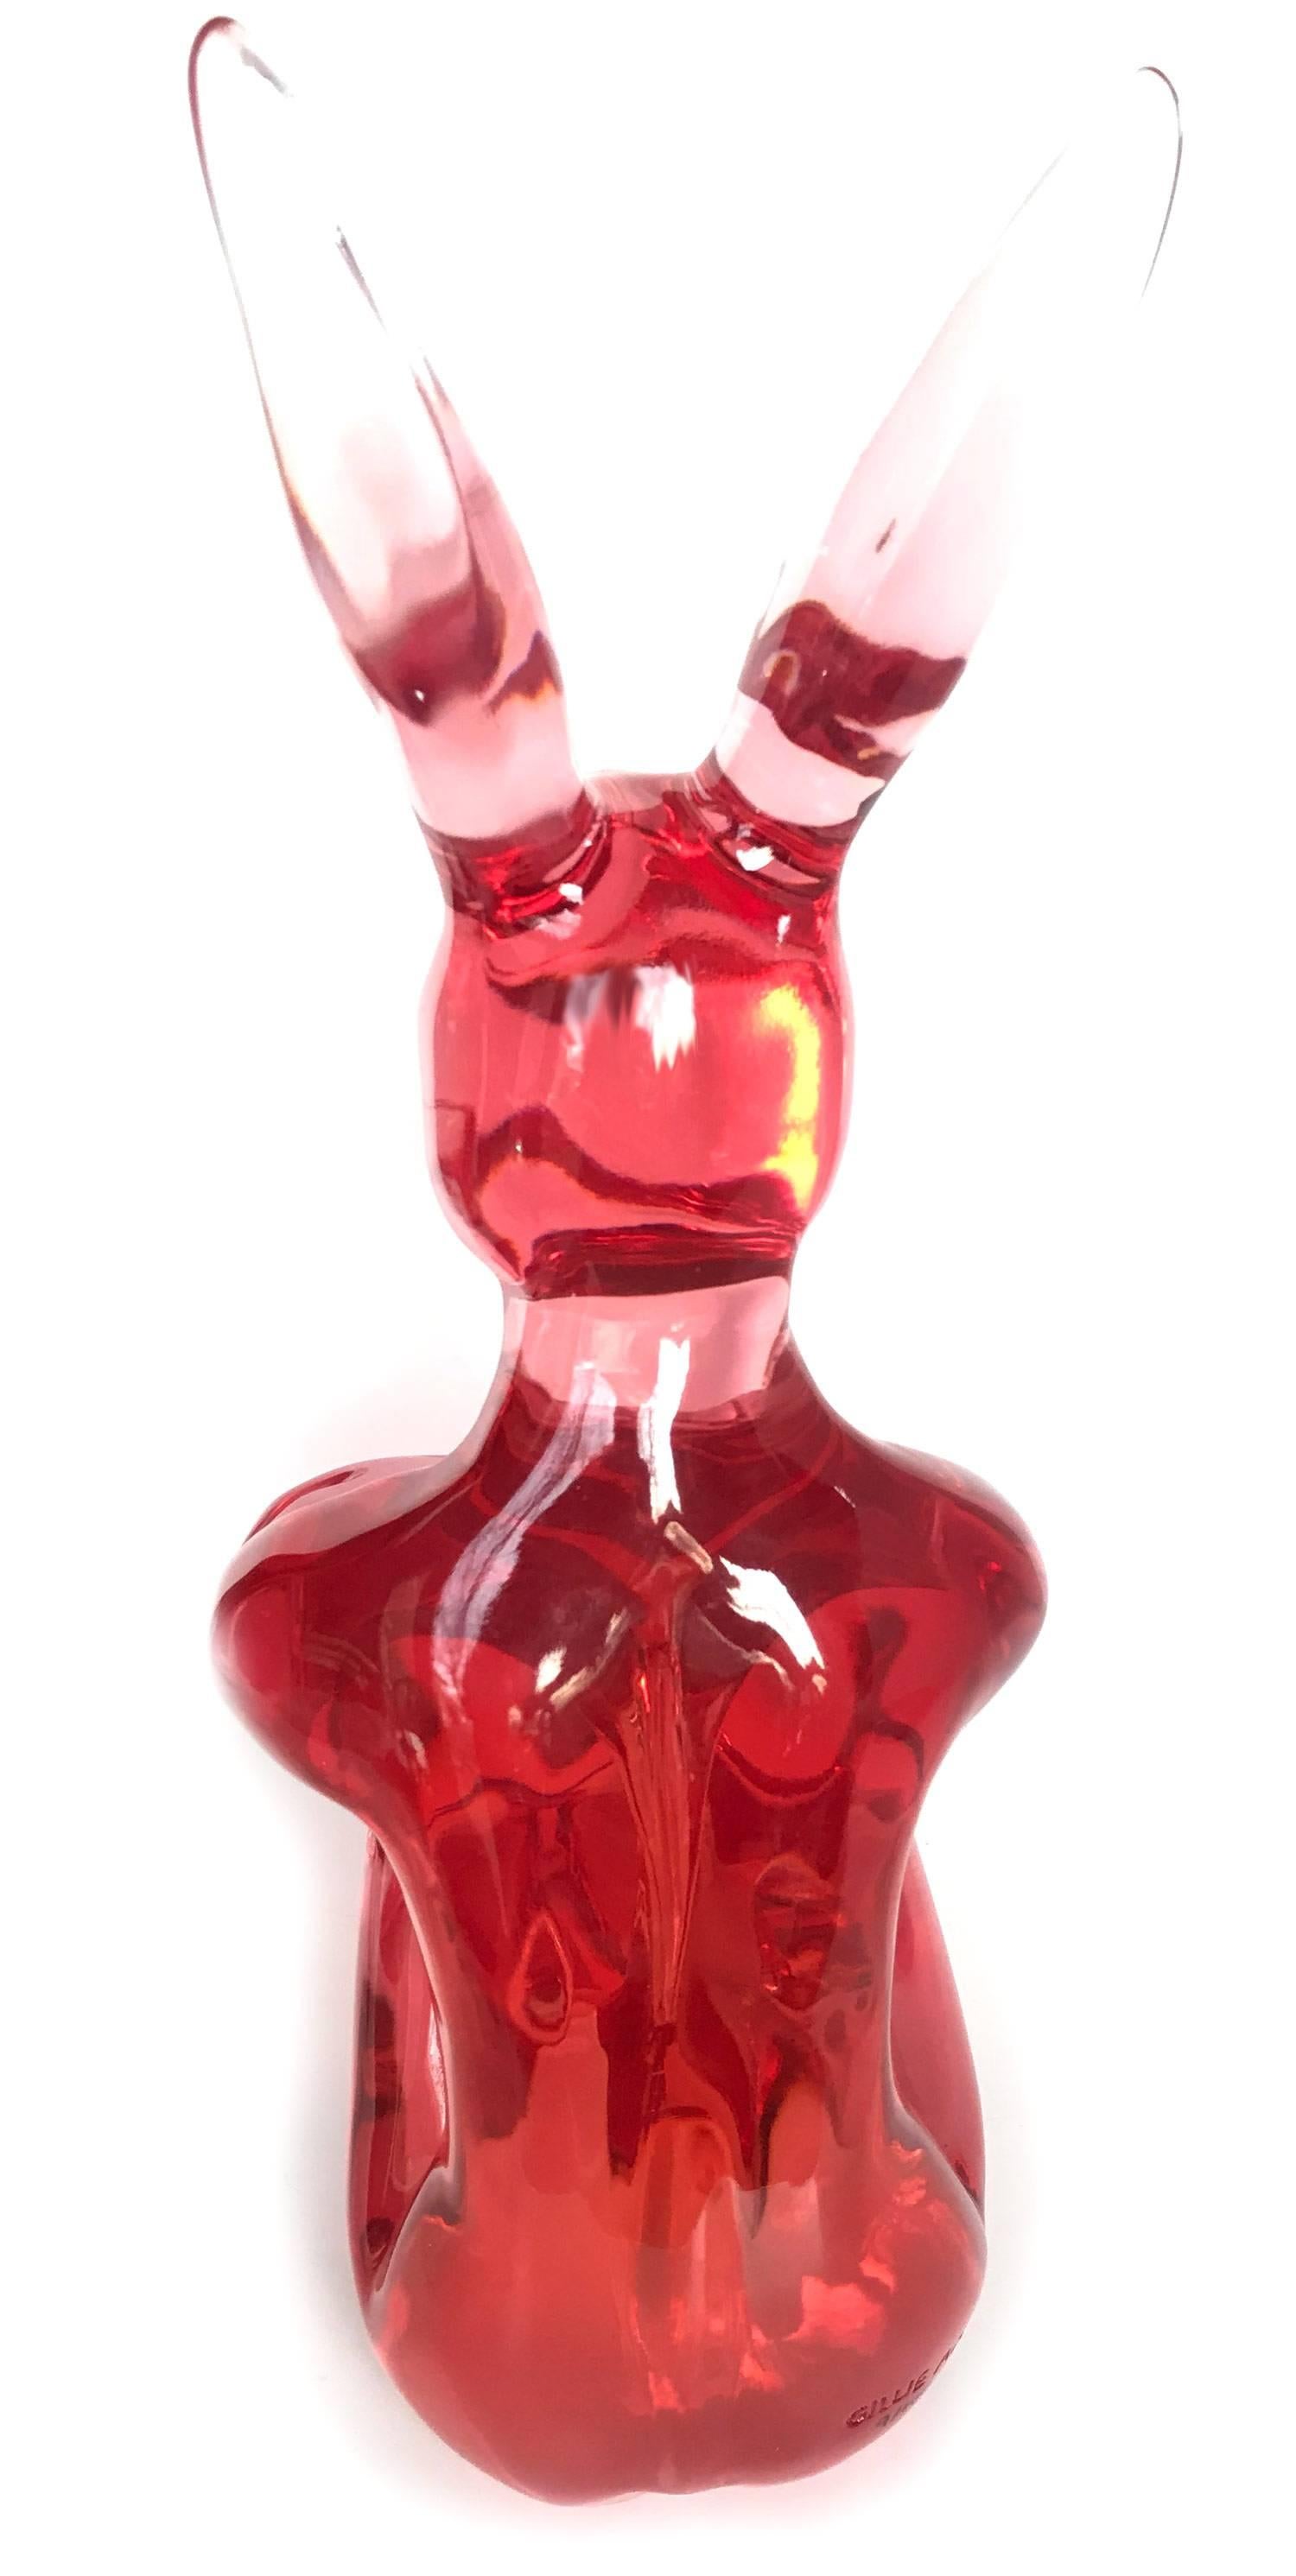 Lolly Rabbitgirl (Pink) - Pop Art Sculpture by Gillie and Marc Schattner